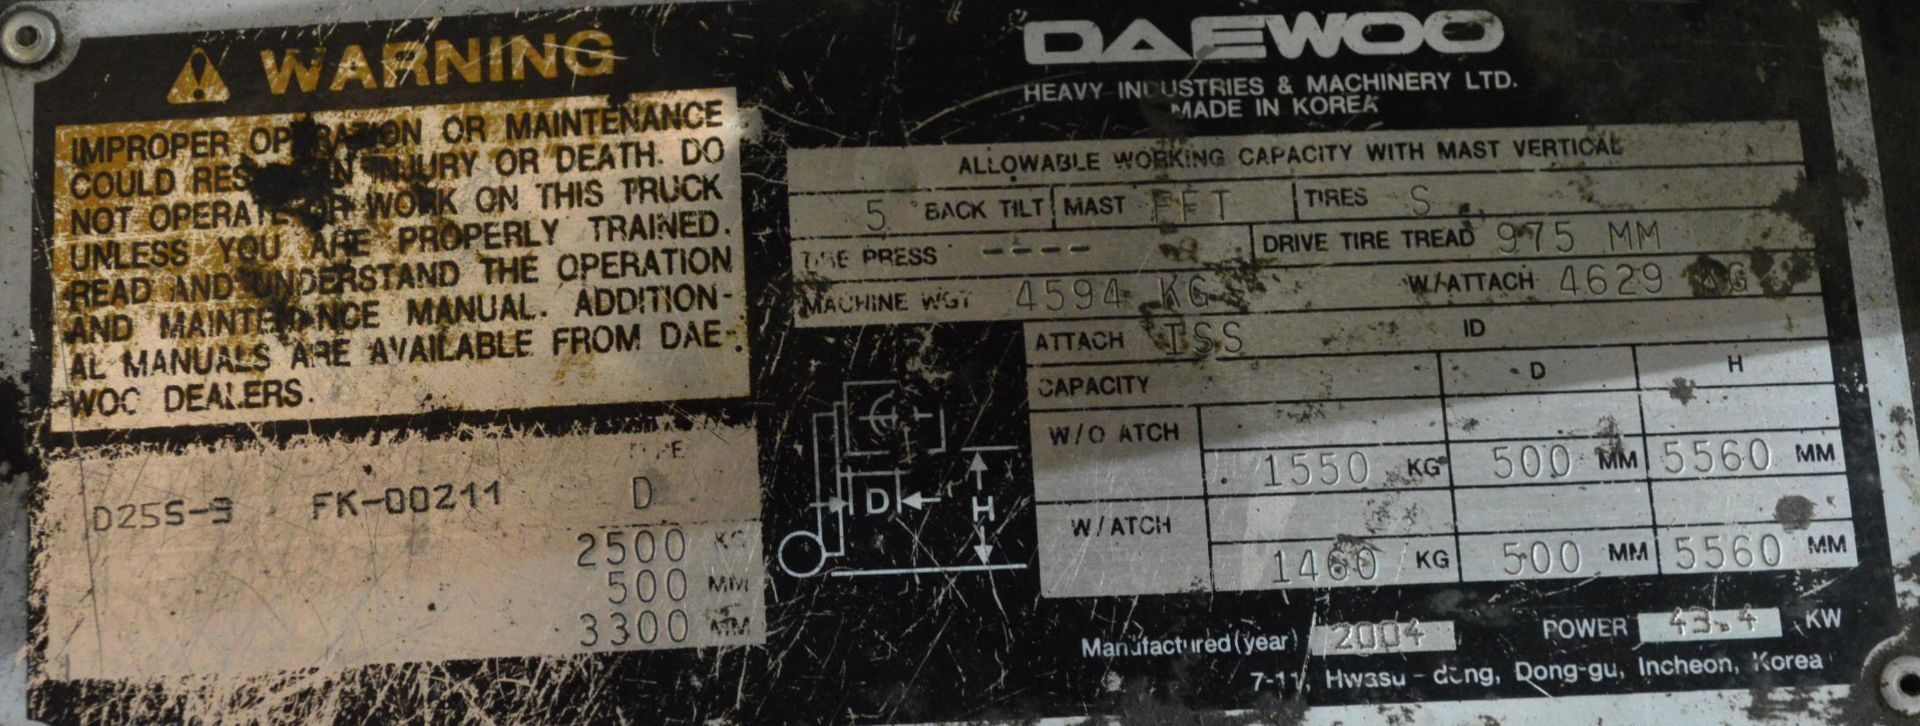 Daewoo D25S-3 2500kg cap. DIESEL ENGINE FORK LIFT TRUCK, serial no. FK-00211, indicated hours at - Bild 6 aus 8